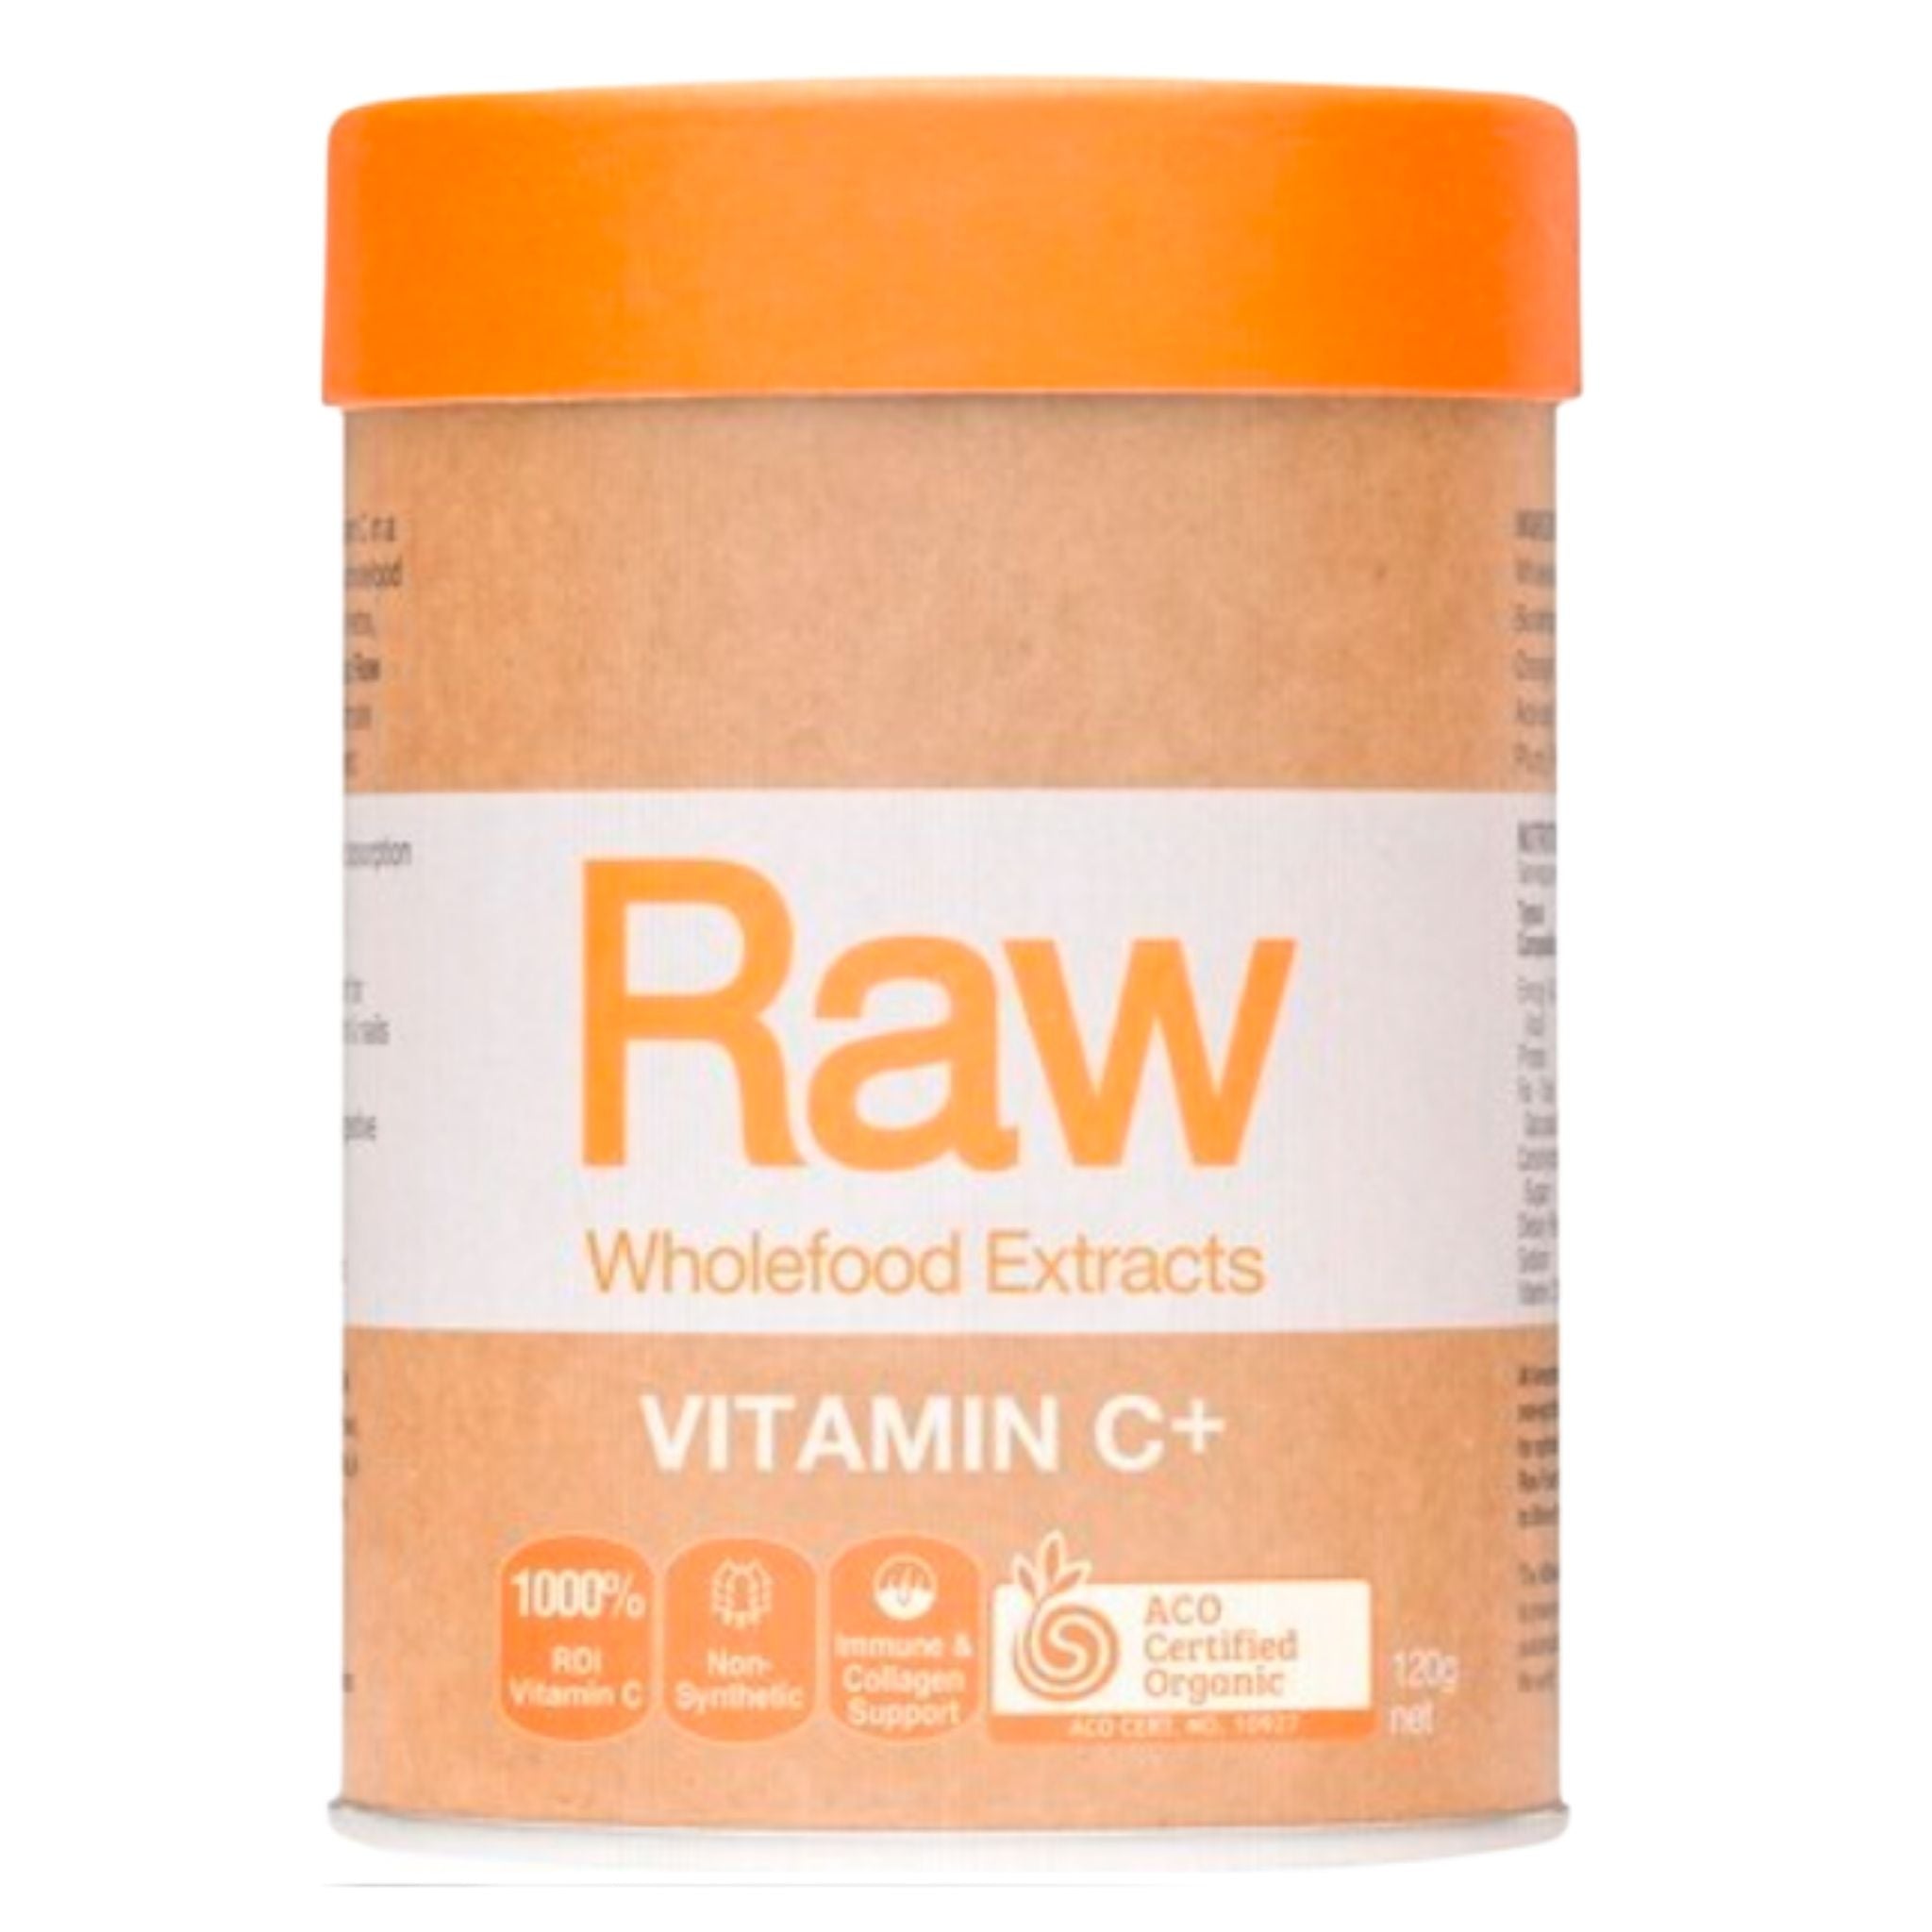 Vitamin C + (Organic) Amazonia Raw Wholefood Extracts. 120gr